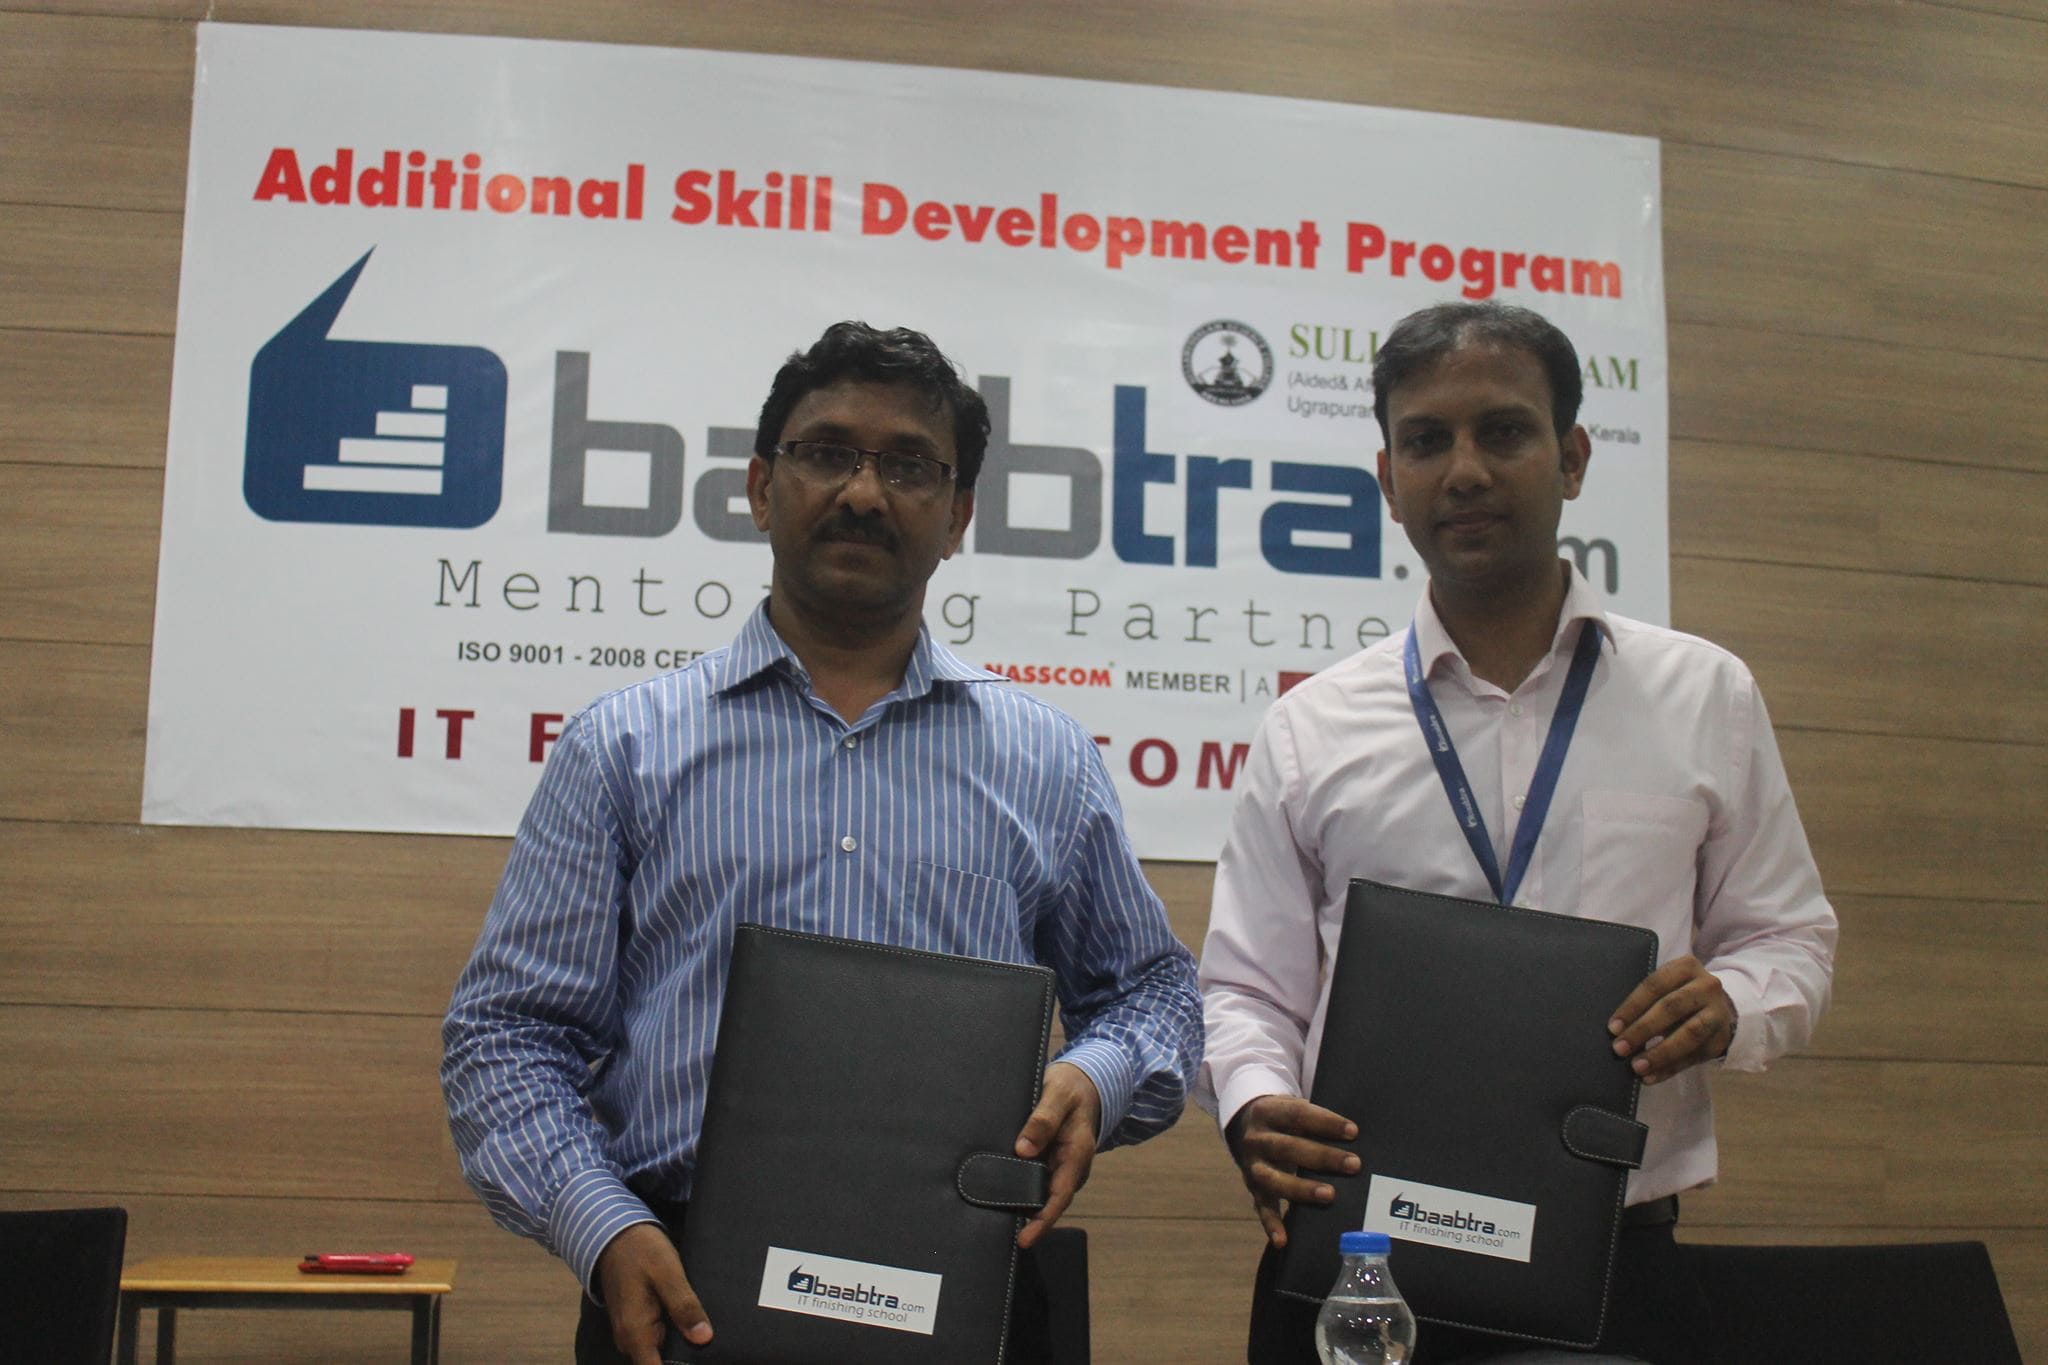 additional skill development program Cyber Square Pro 2014